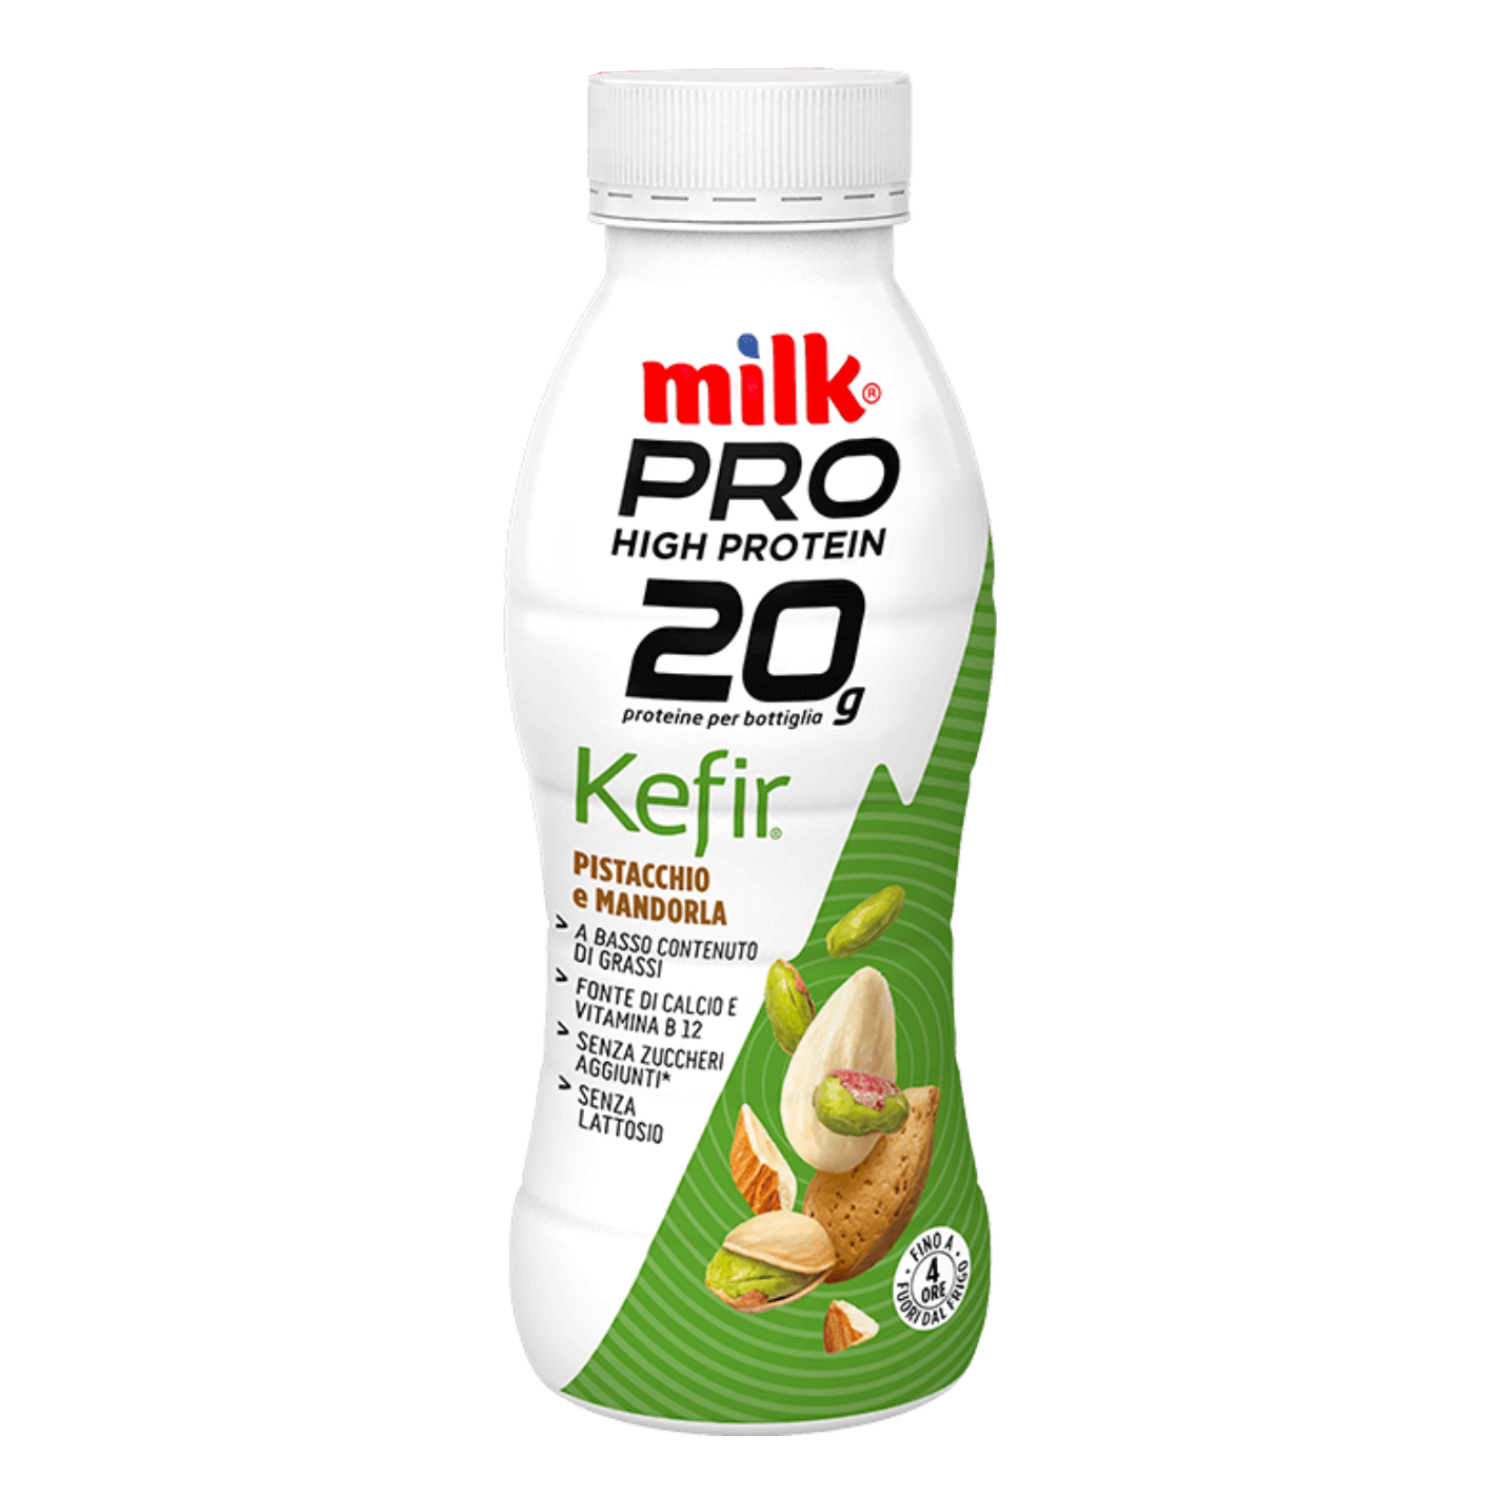 Milk Pro protein Kefir pistacchio/mandorla 310g Latteria Nom